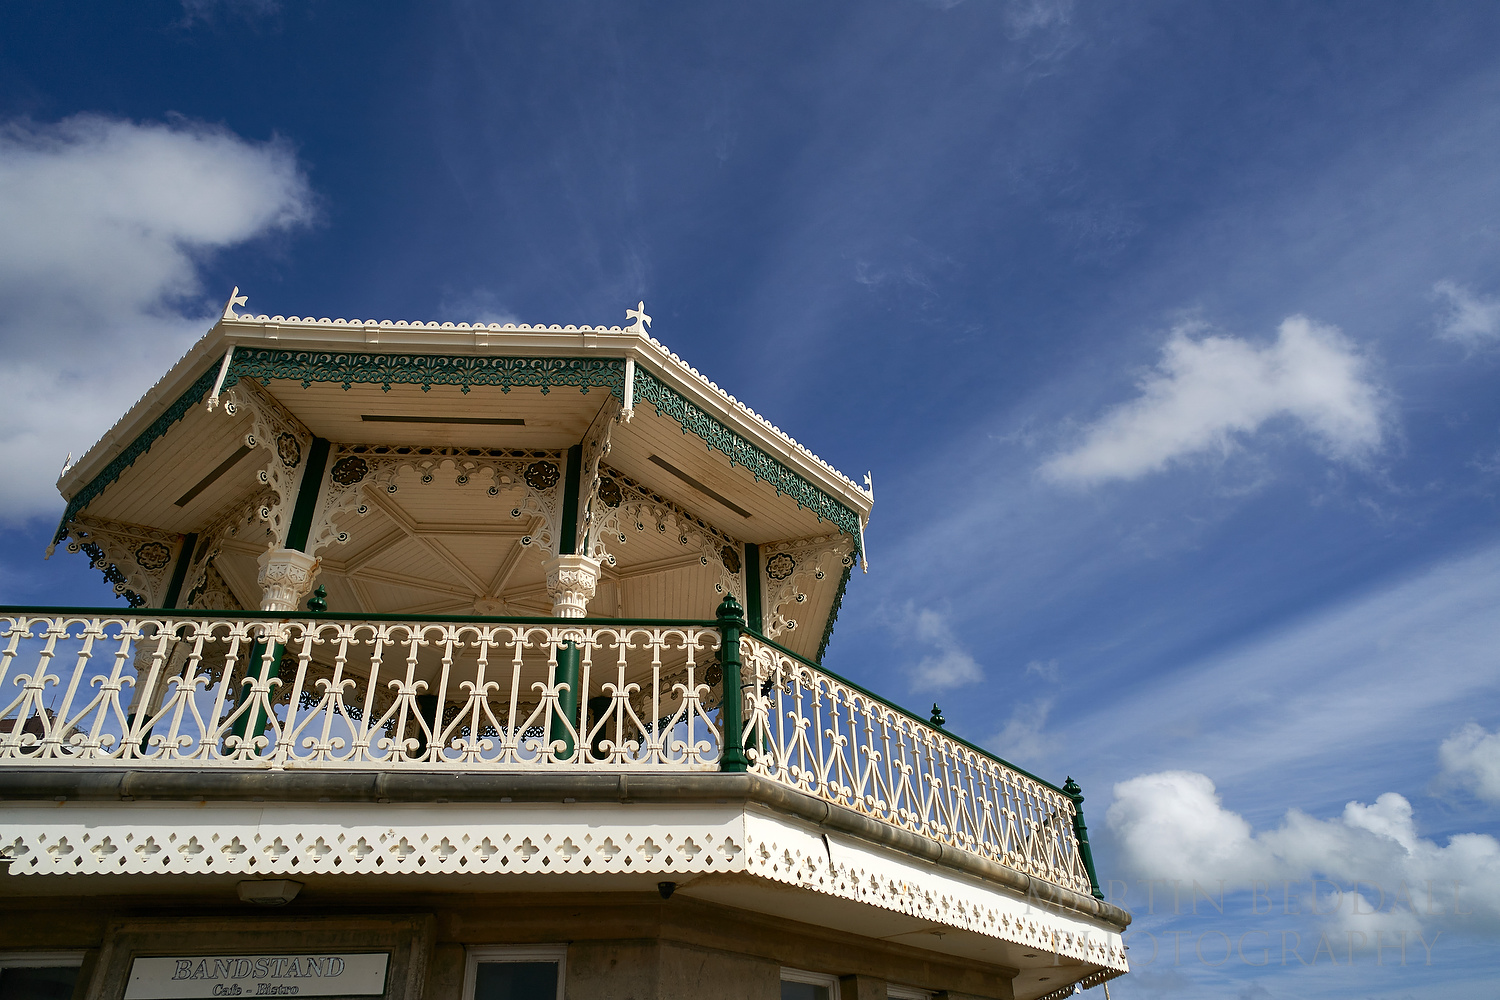 Brighton bandstand